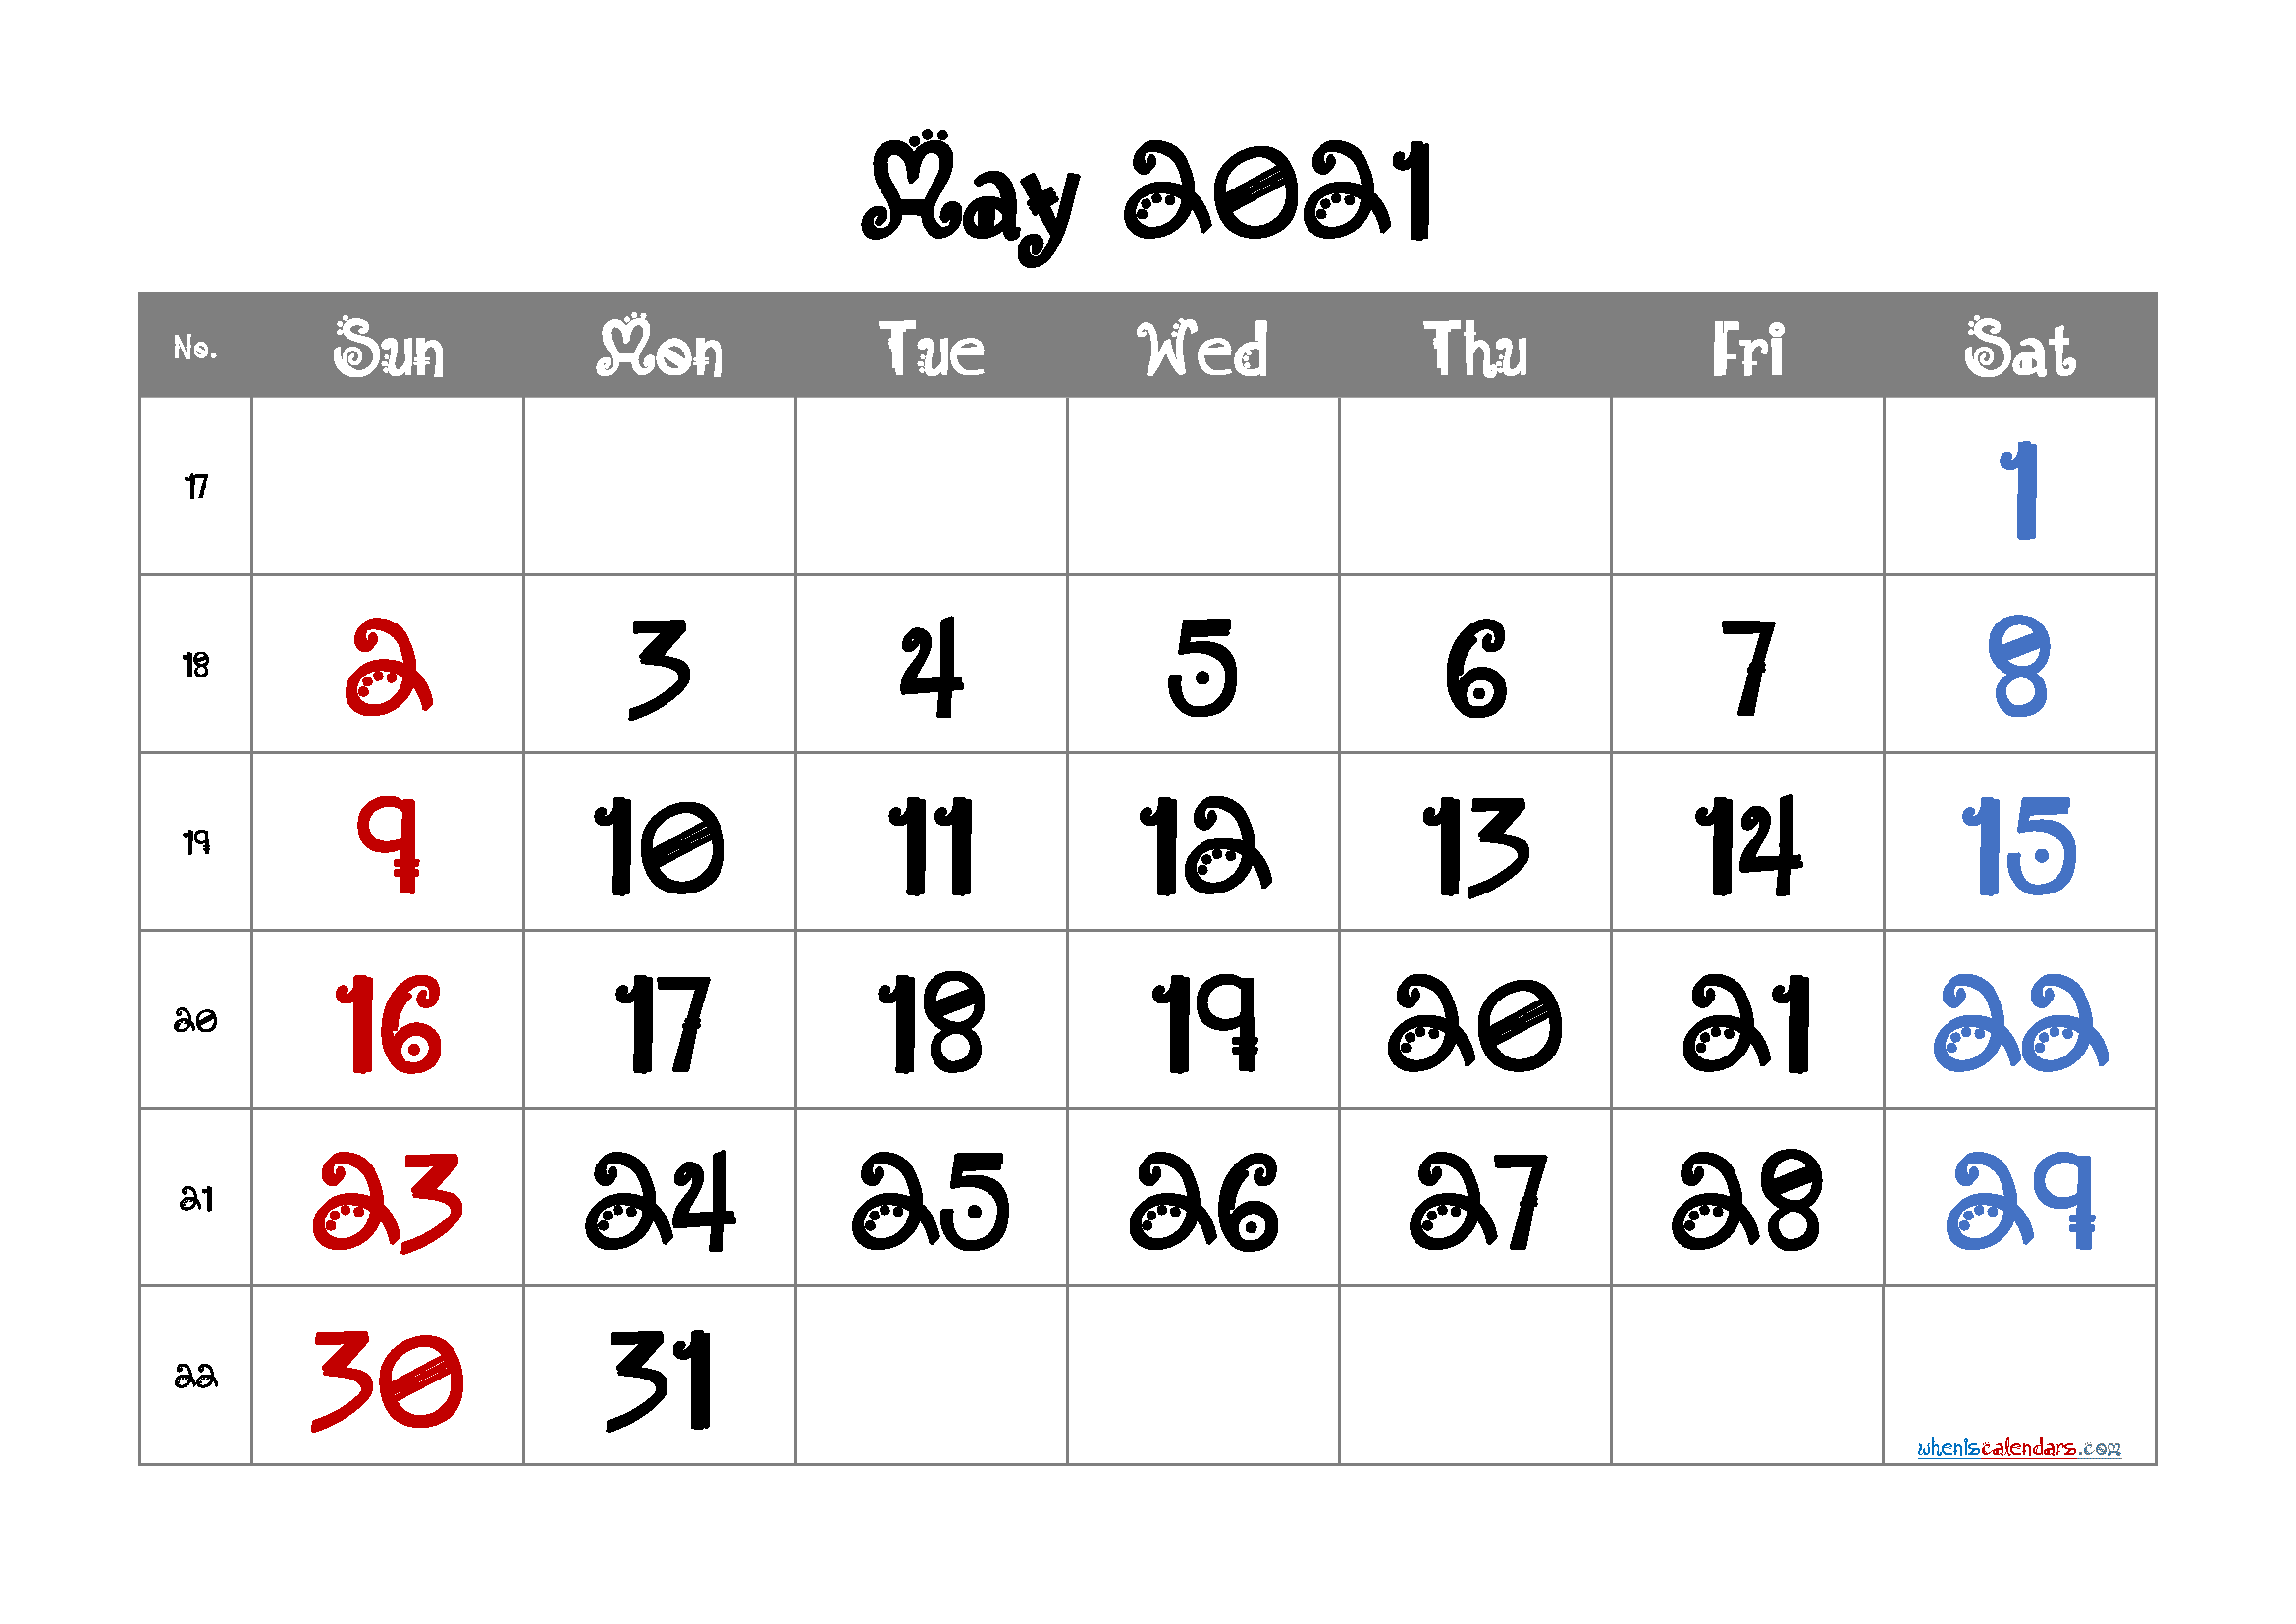 May 2021 Calendar Free Printable